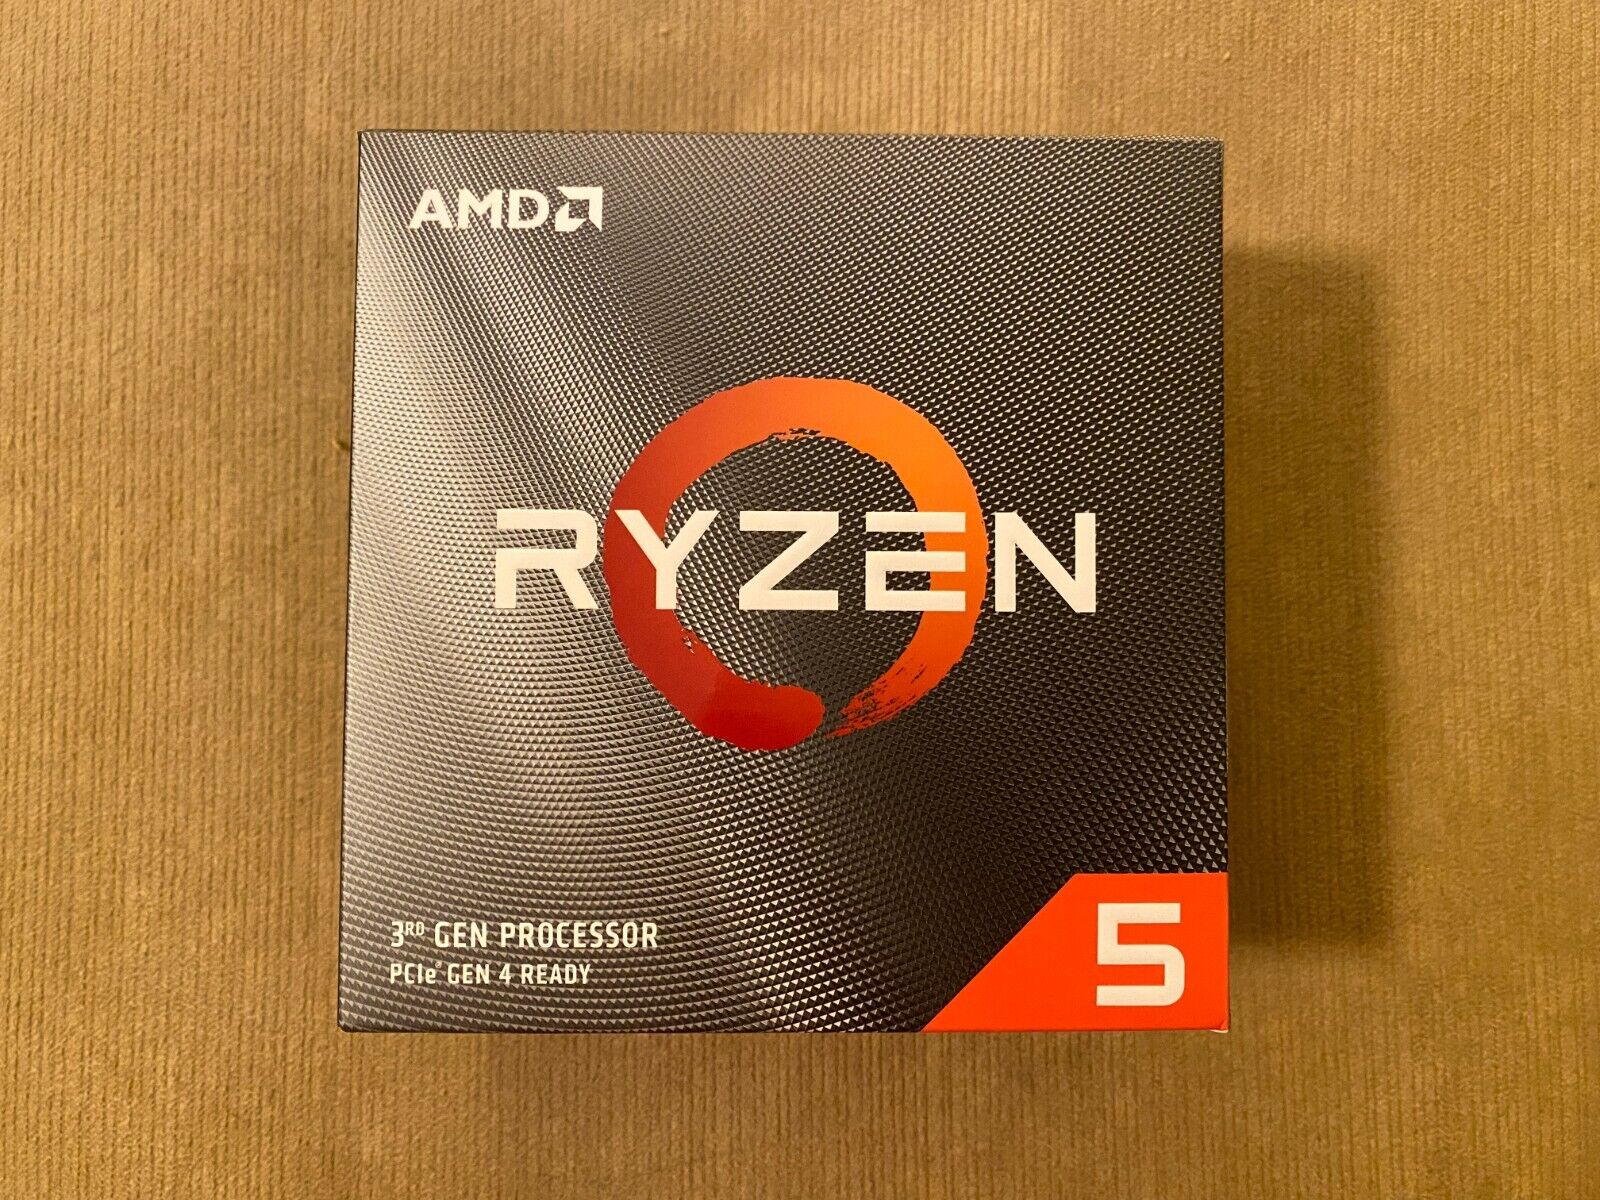 AMD Ryzen 5 3600 Processor with Cooler & Box (3.6GHz, 6 Cores, Socket AM4)